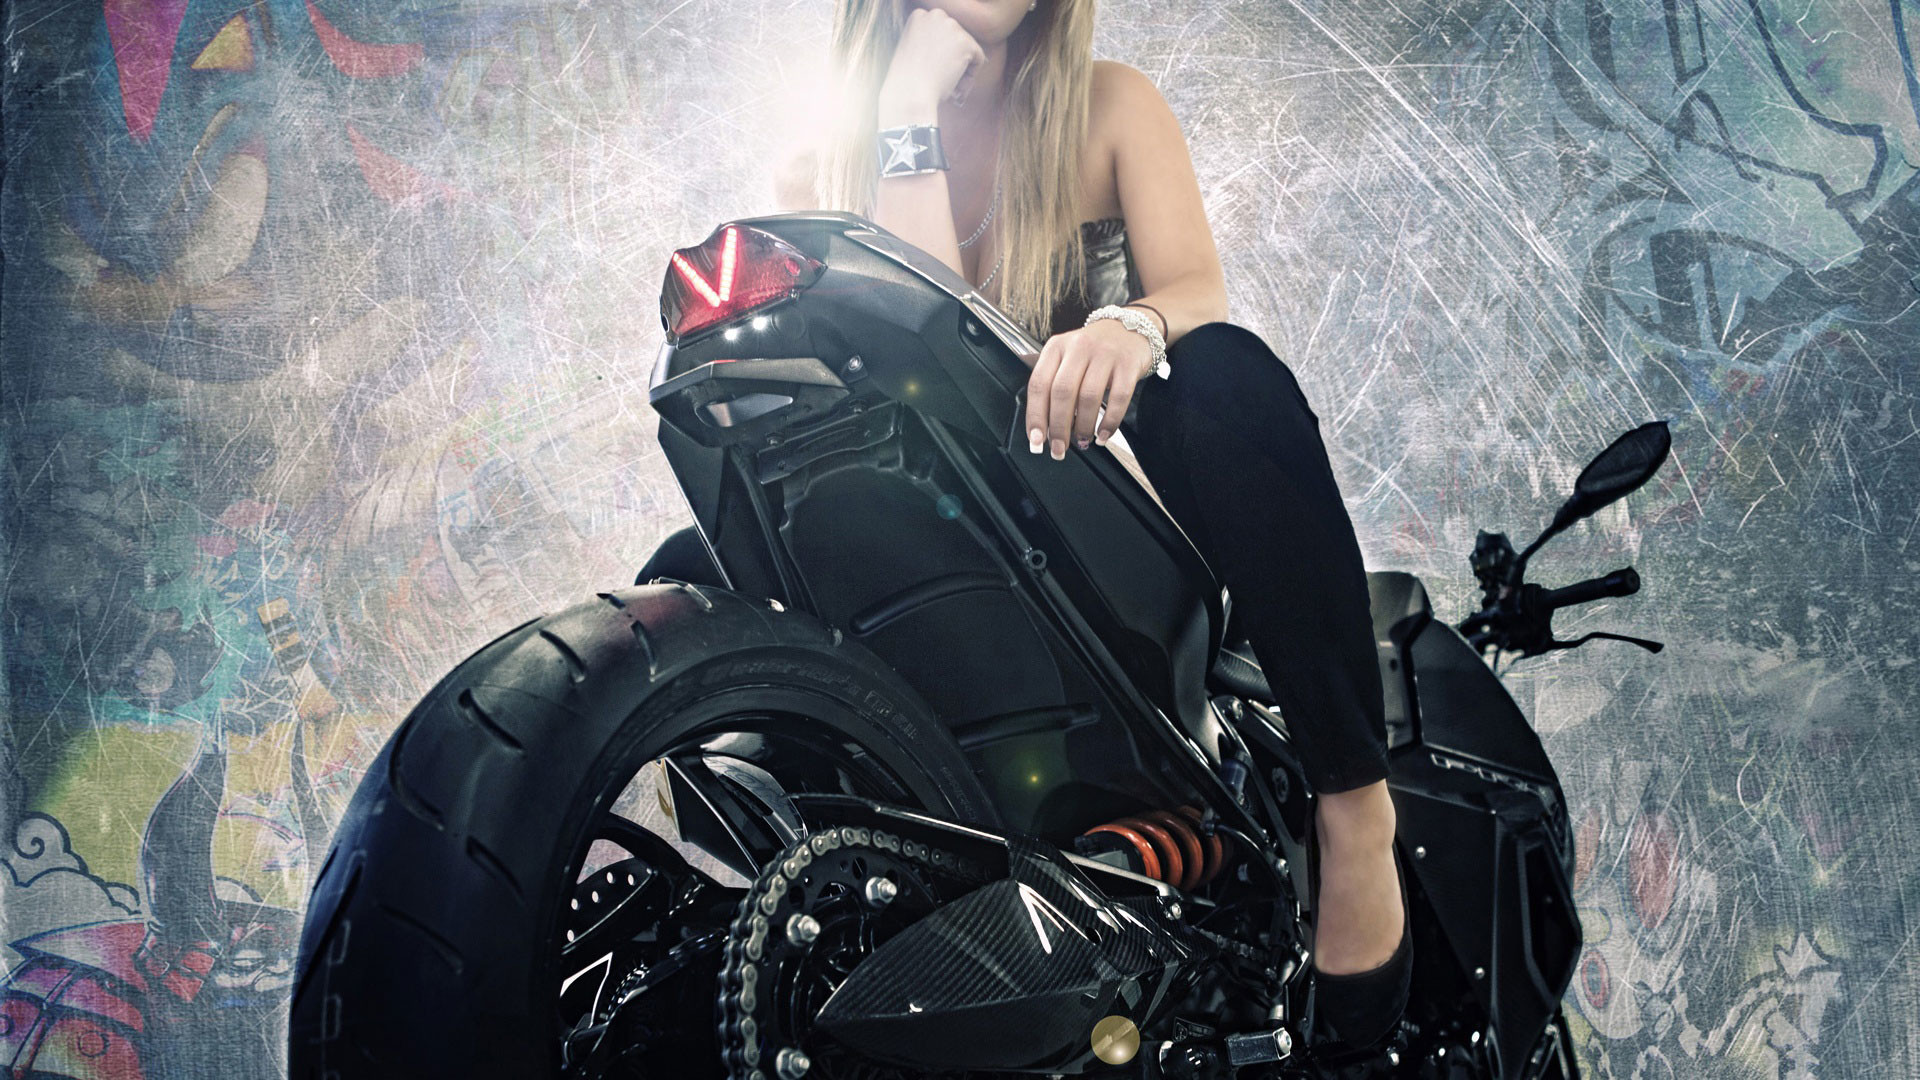 Hd pics photos stunning sexy girl model bike attractive bmw predator hd quality desktop background wallpaper